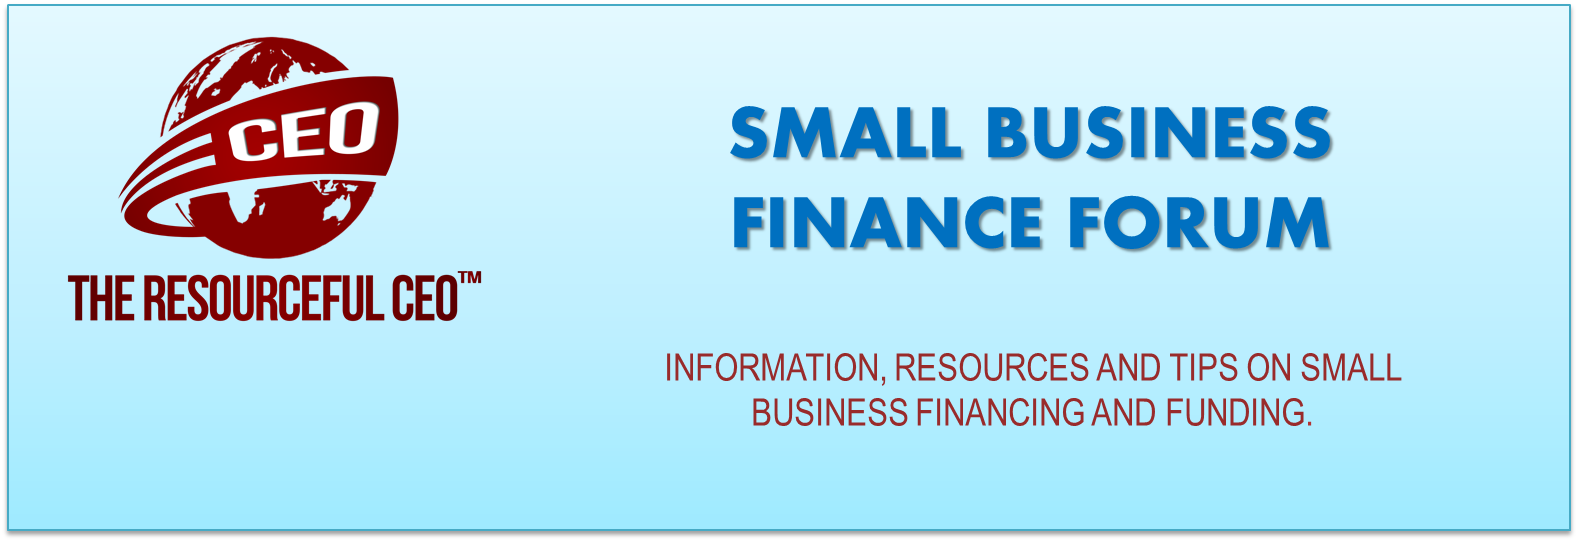 Small Business Finance Forum